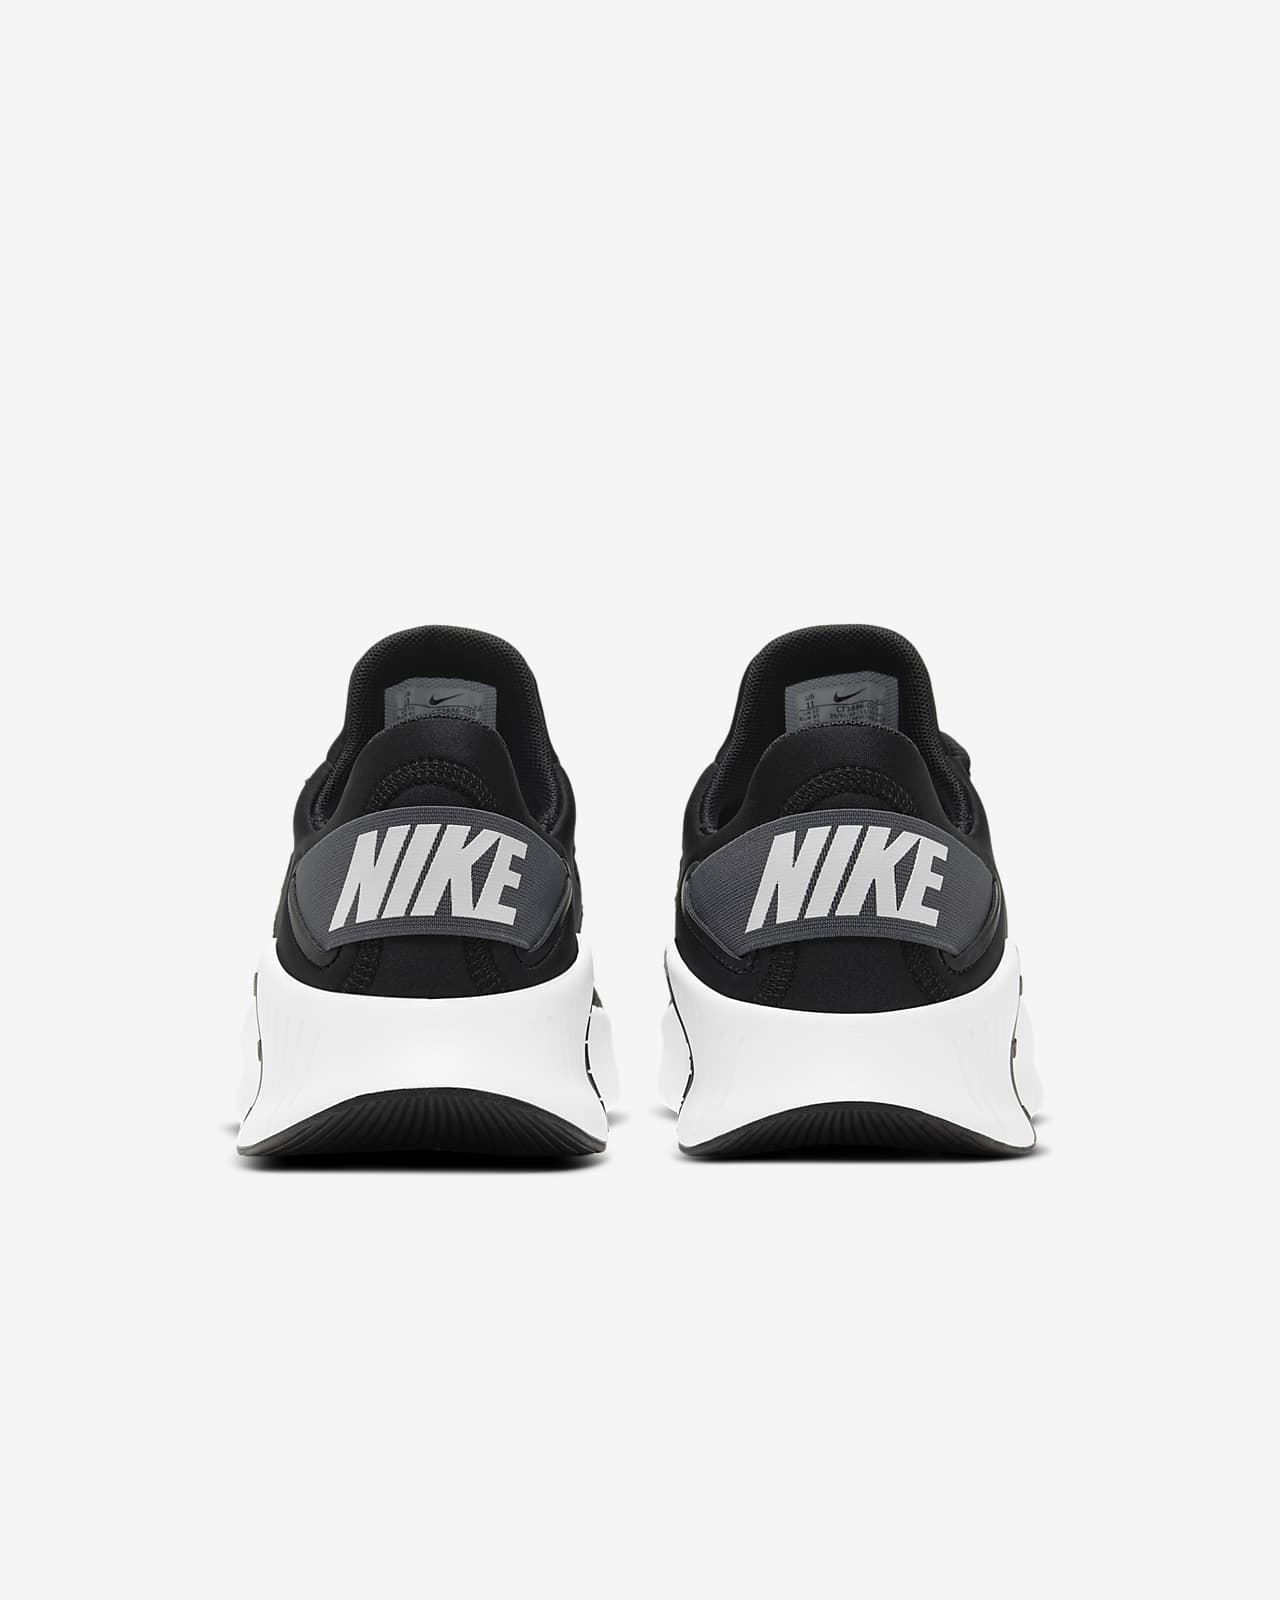 Calzado Nike Metcon 4. Nike MX